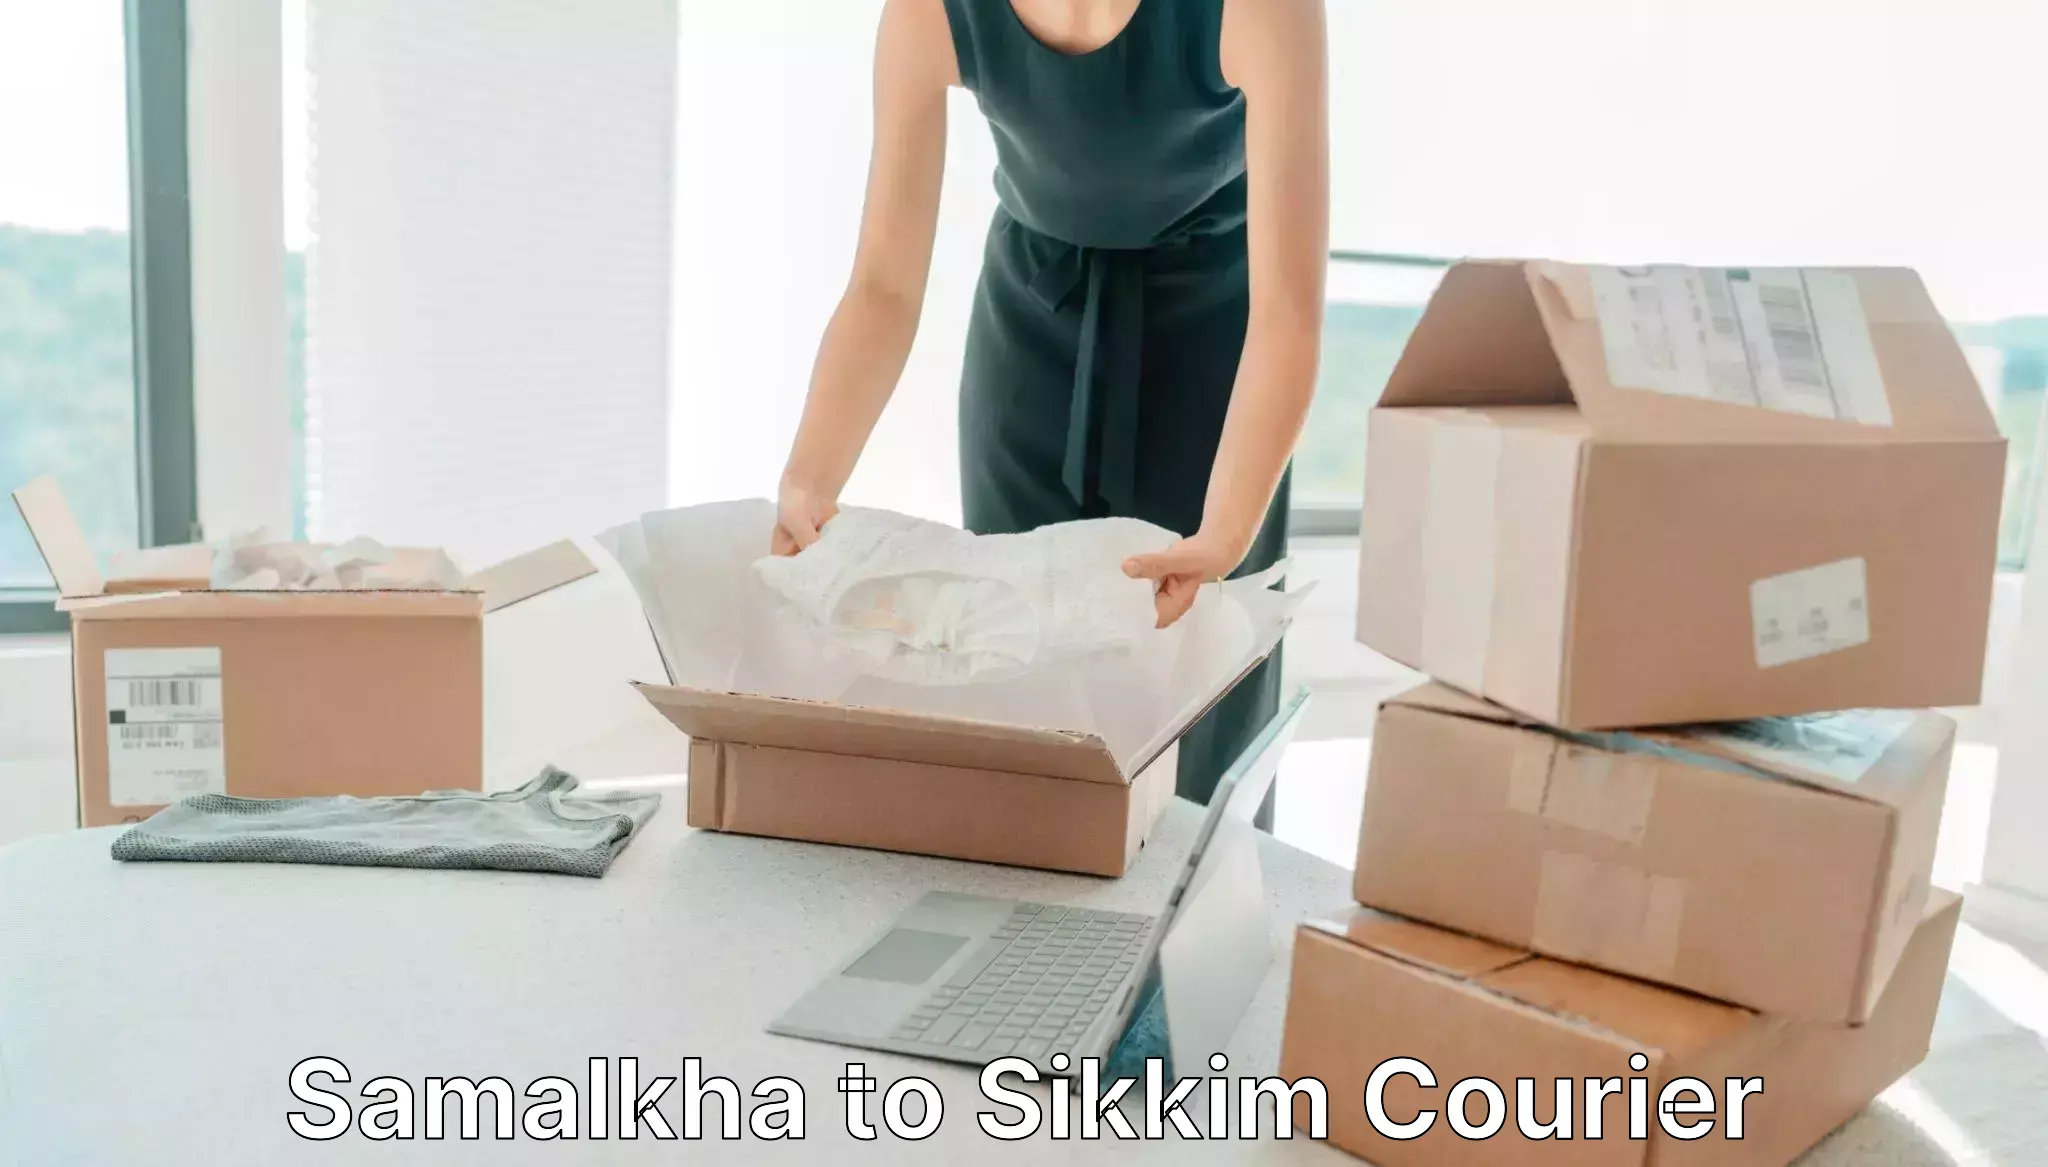 Professional courier handling Samalkha to Sikkim